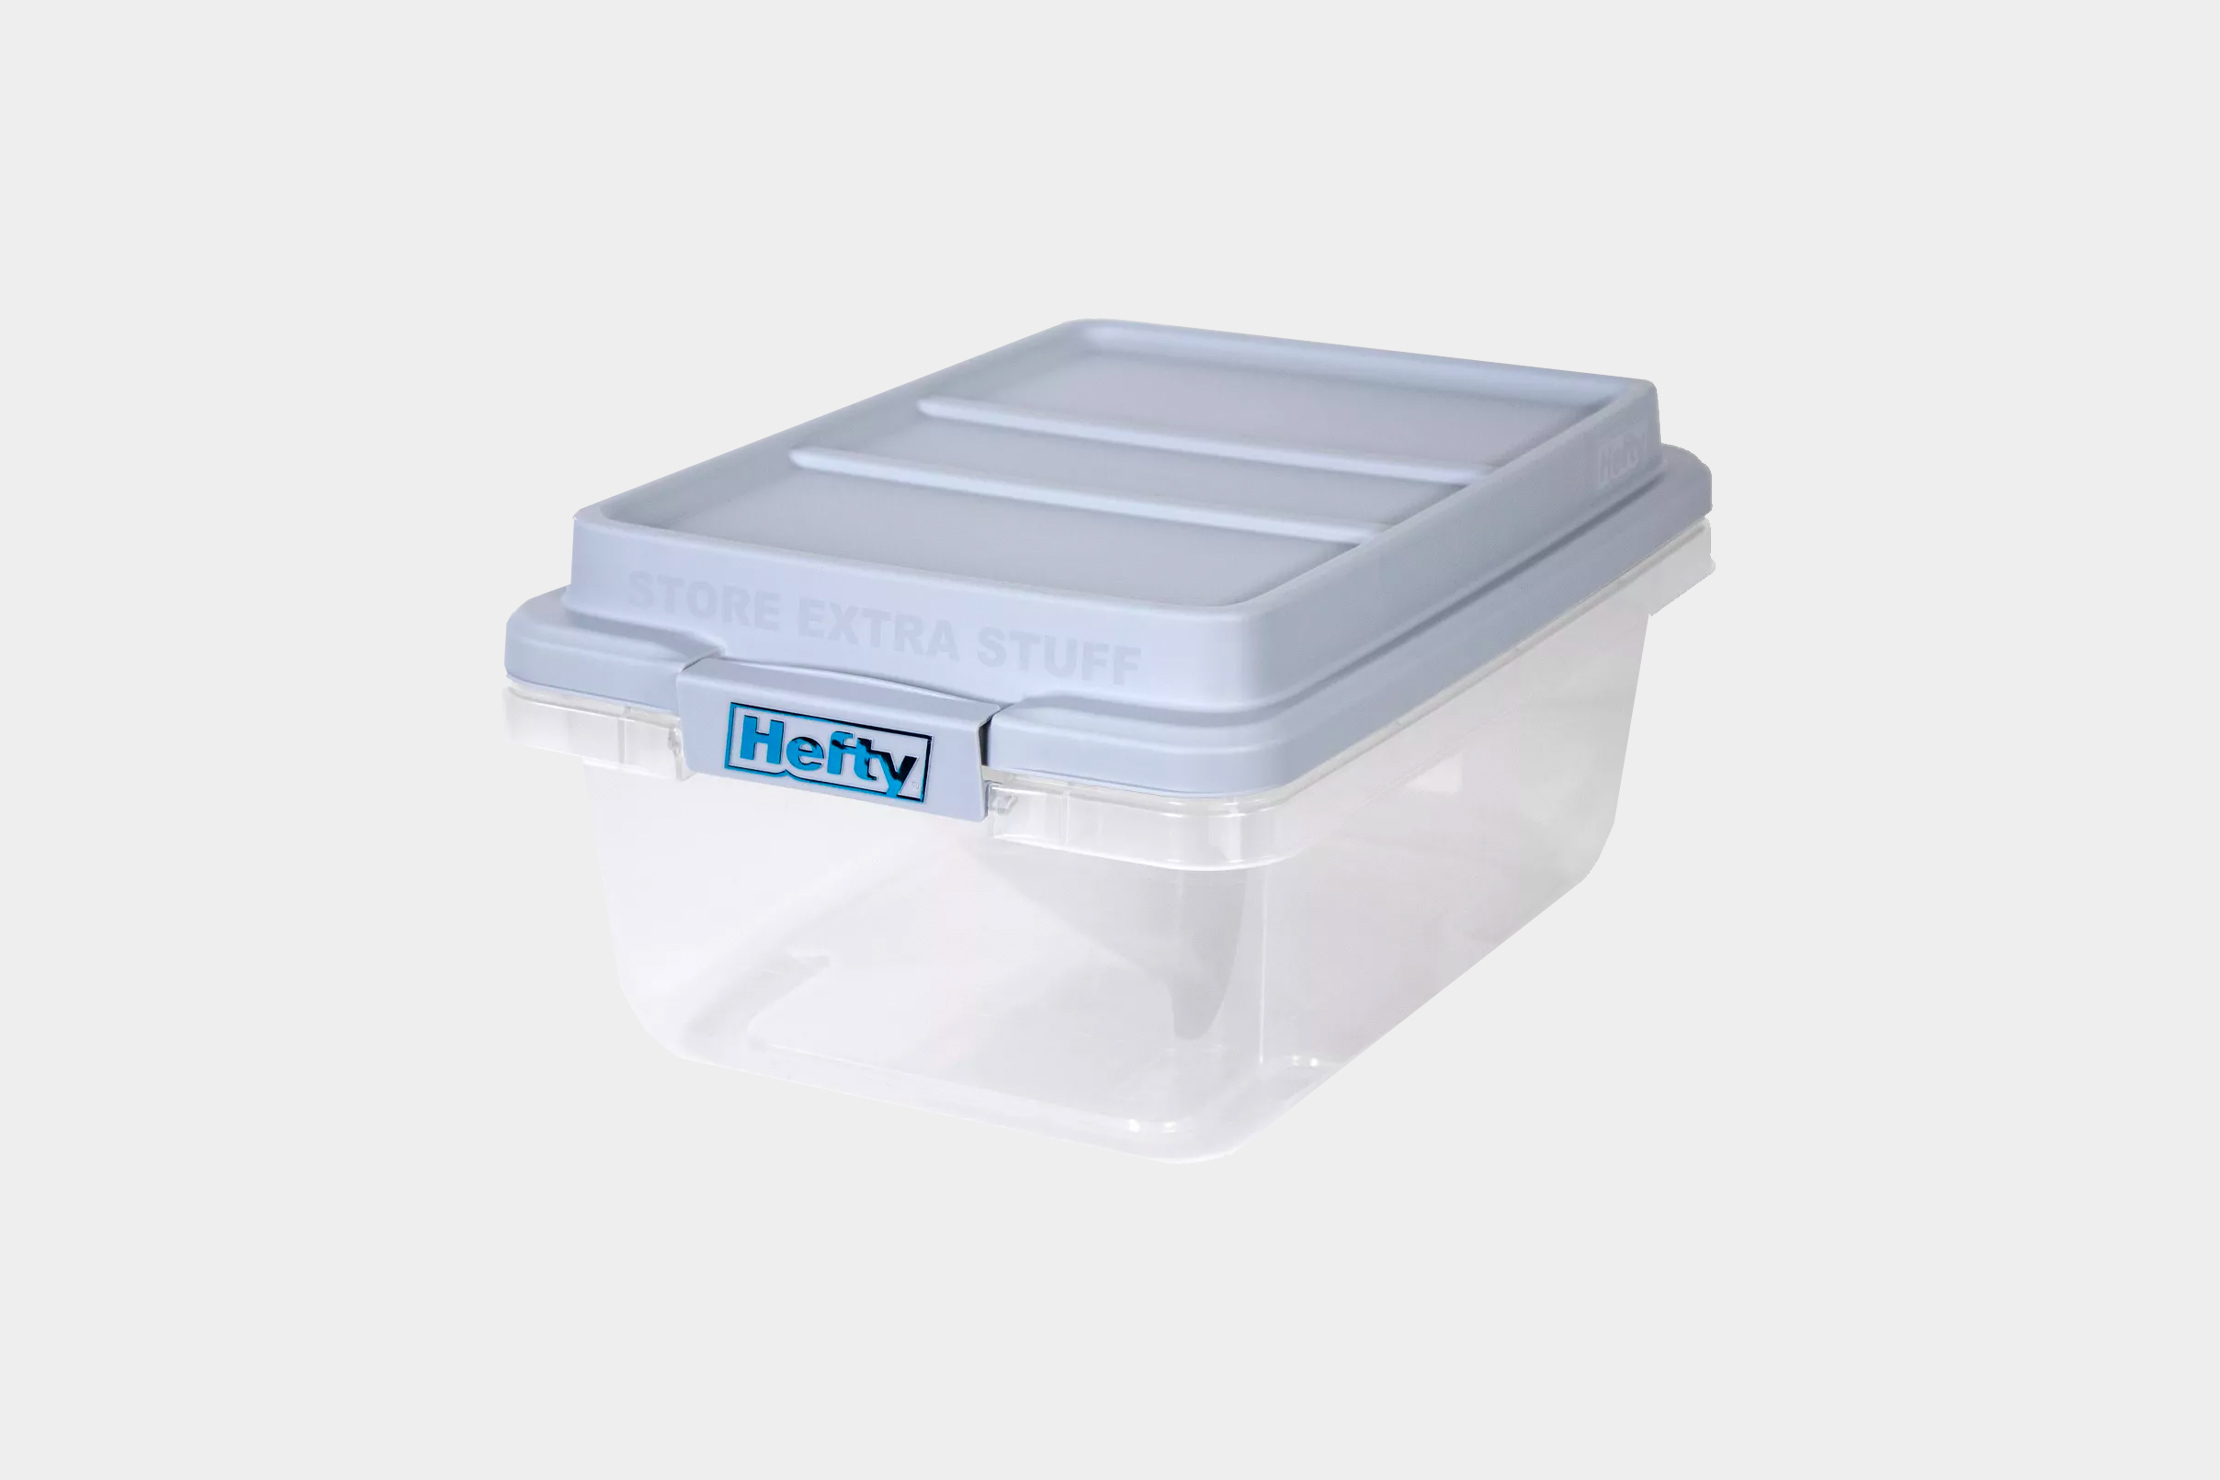 Hefty 18qt Plastic Storage Bin with HI-RISE Stackable Lid